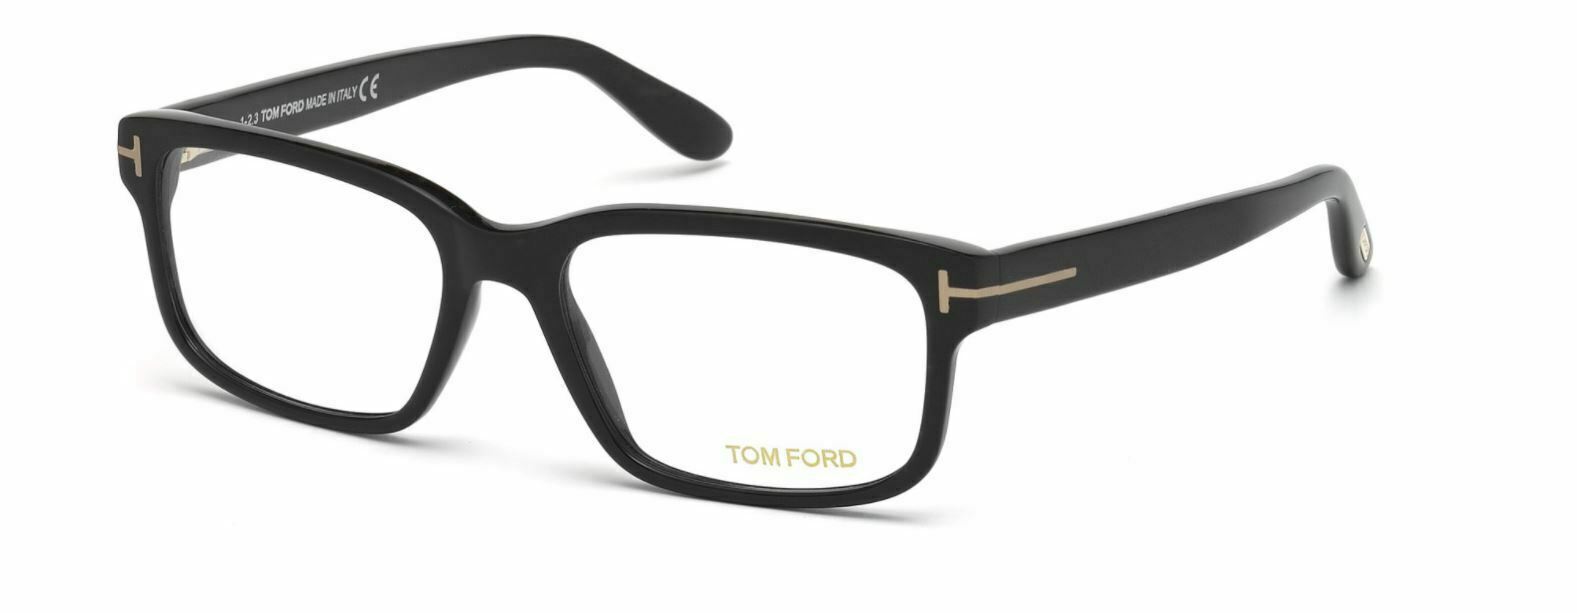 Tom Ford FT5313 001 Shiny Black Eyeglasses